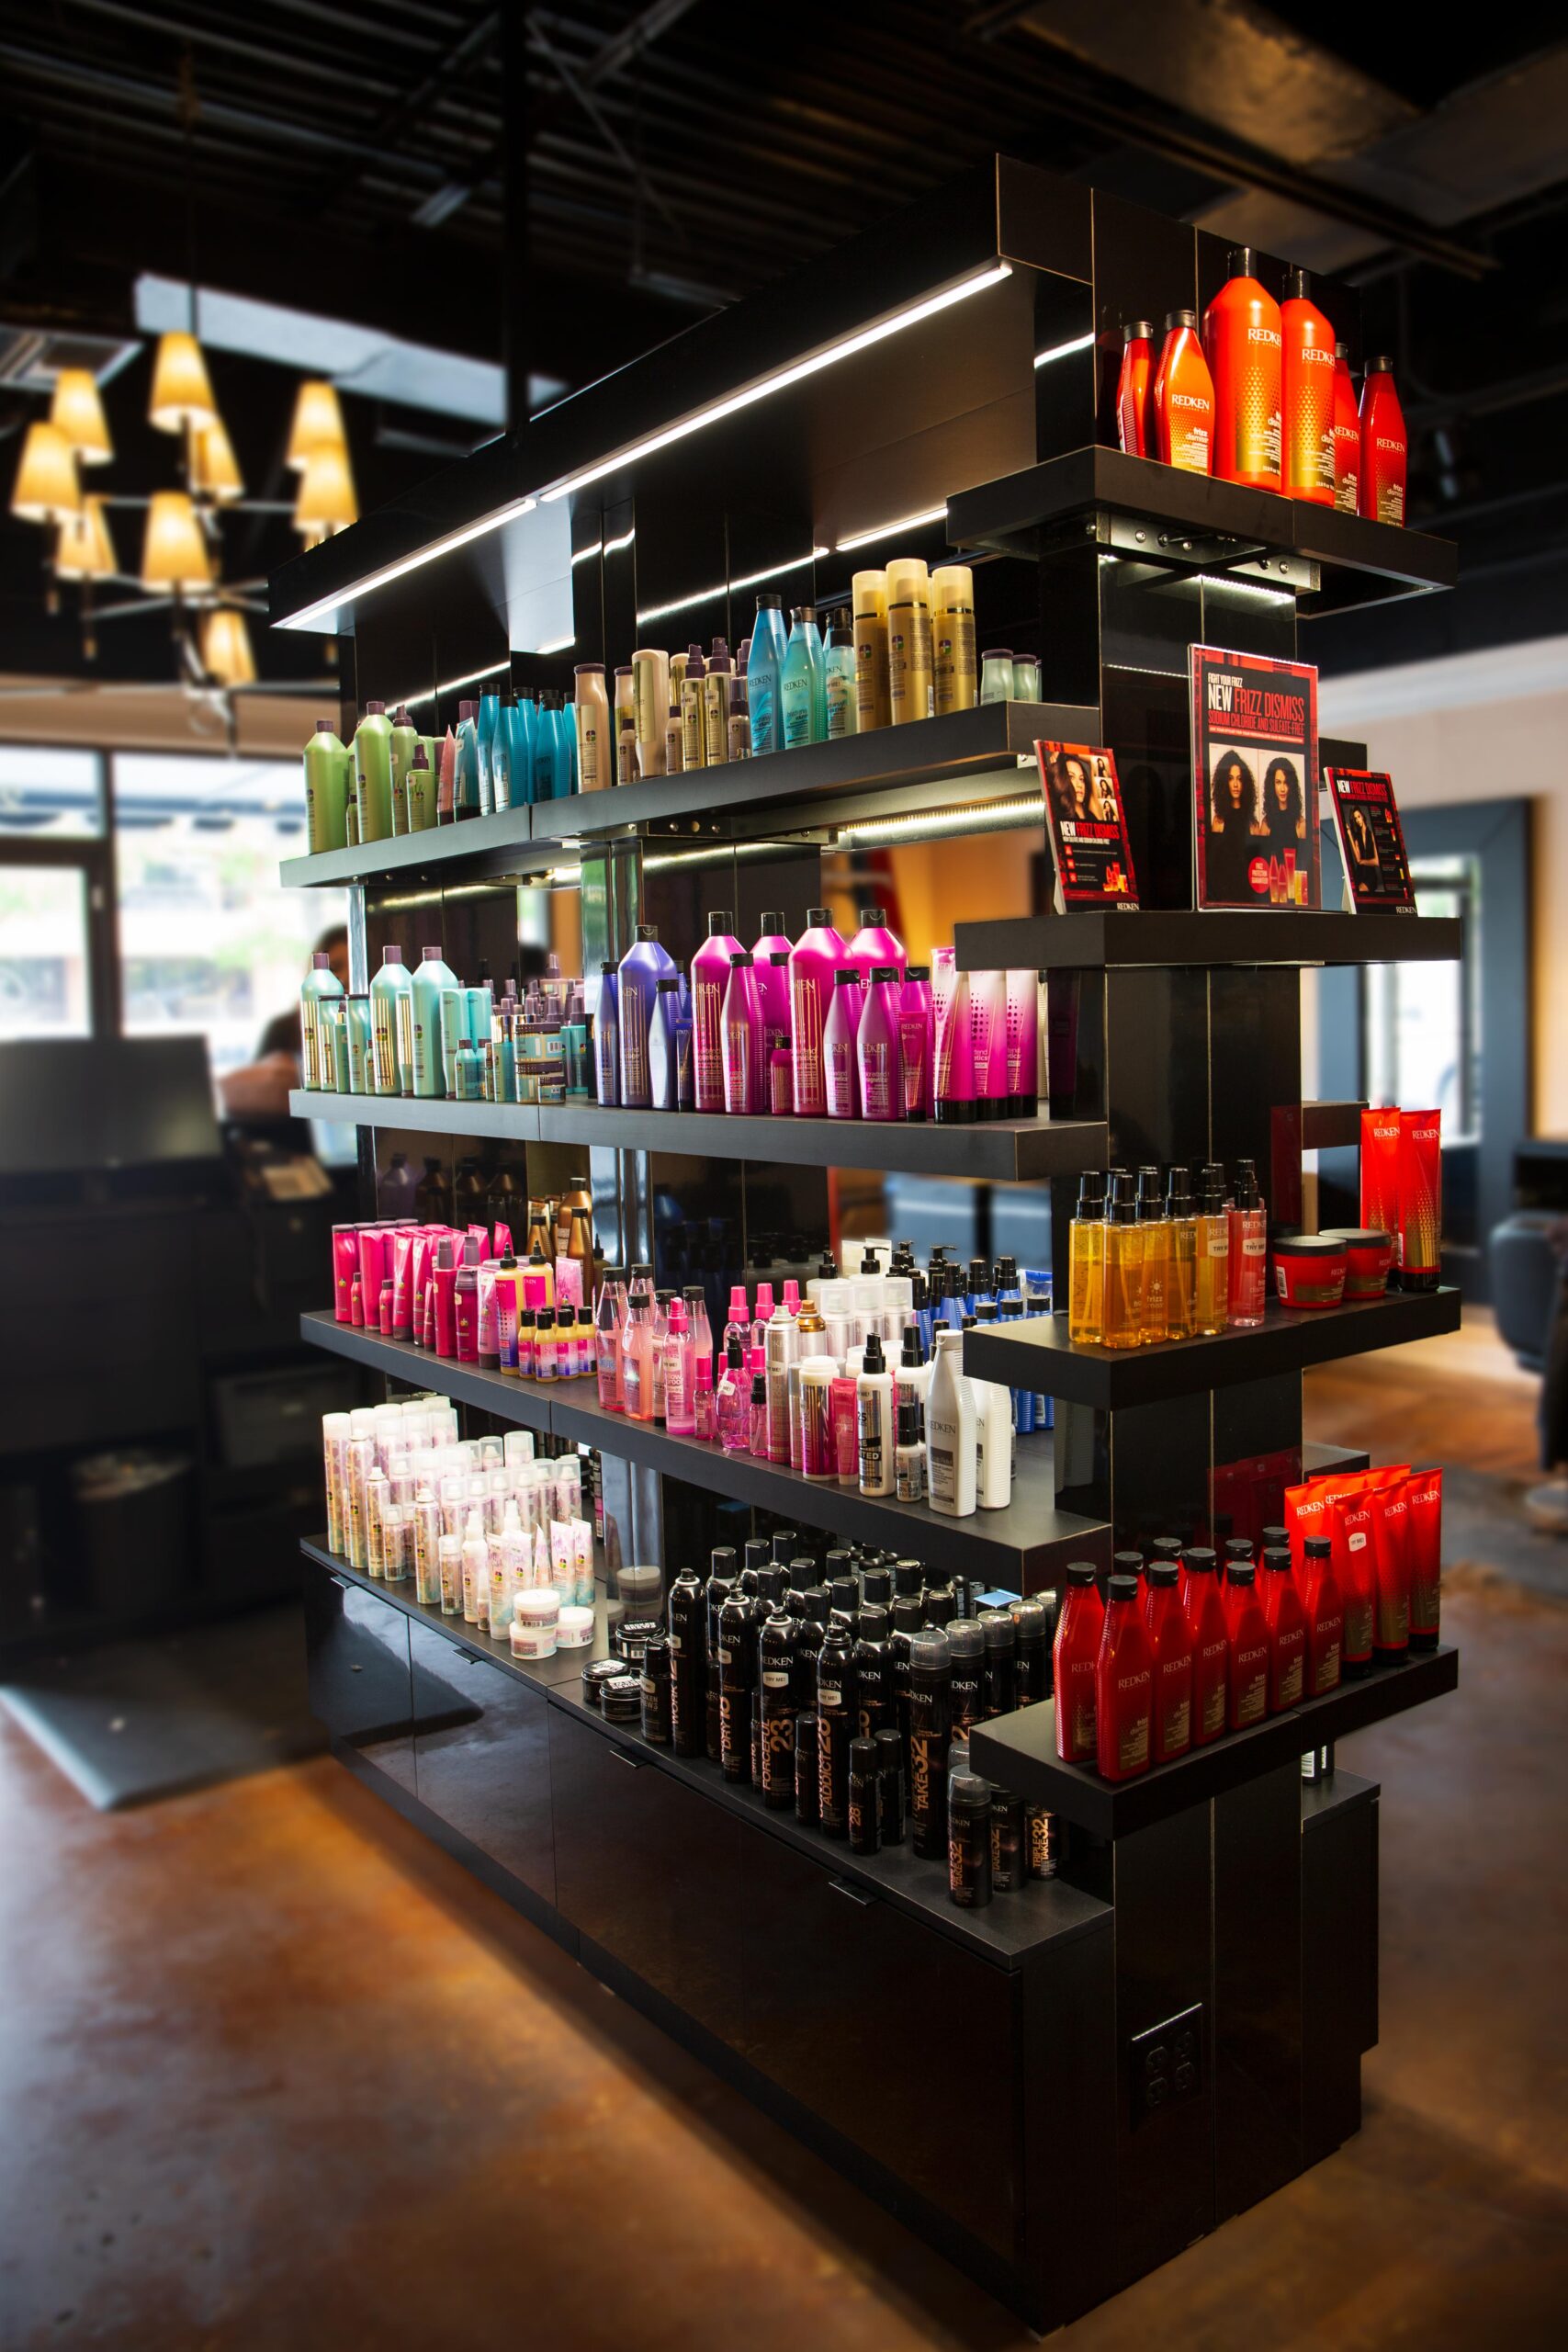 salon display shelve showcasing hair care products